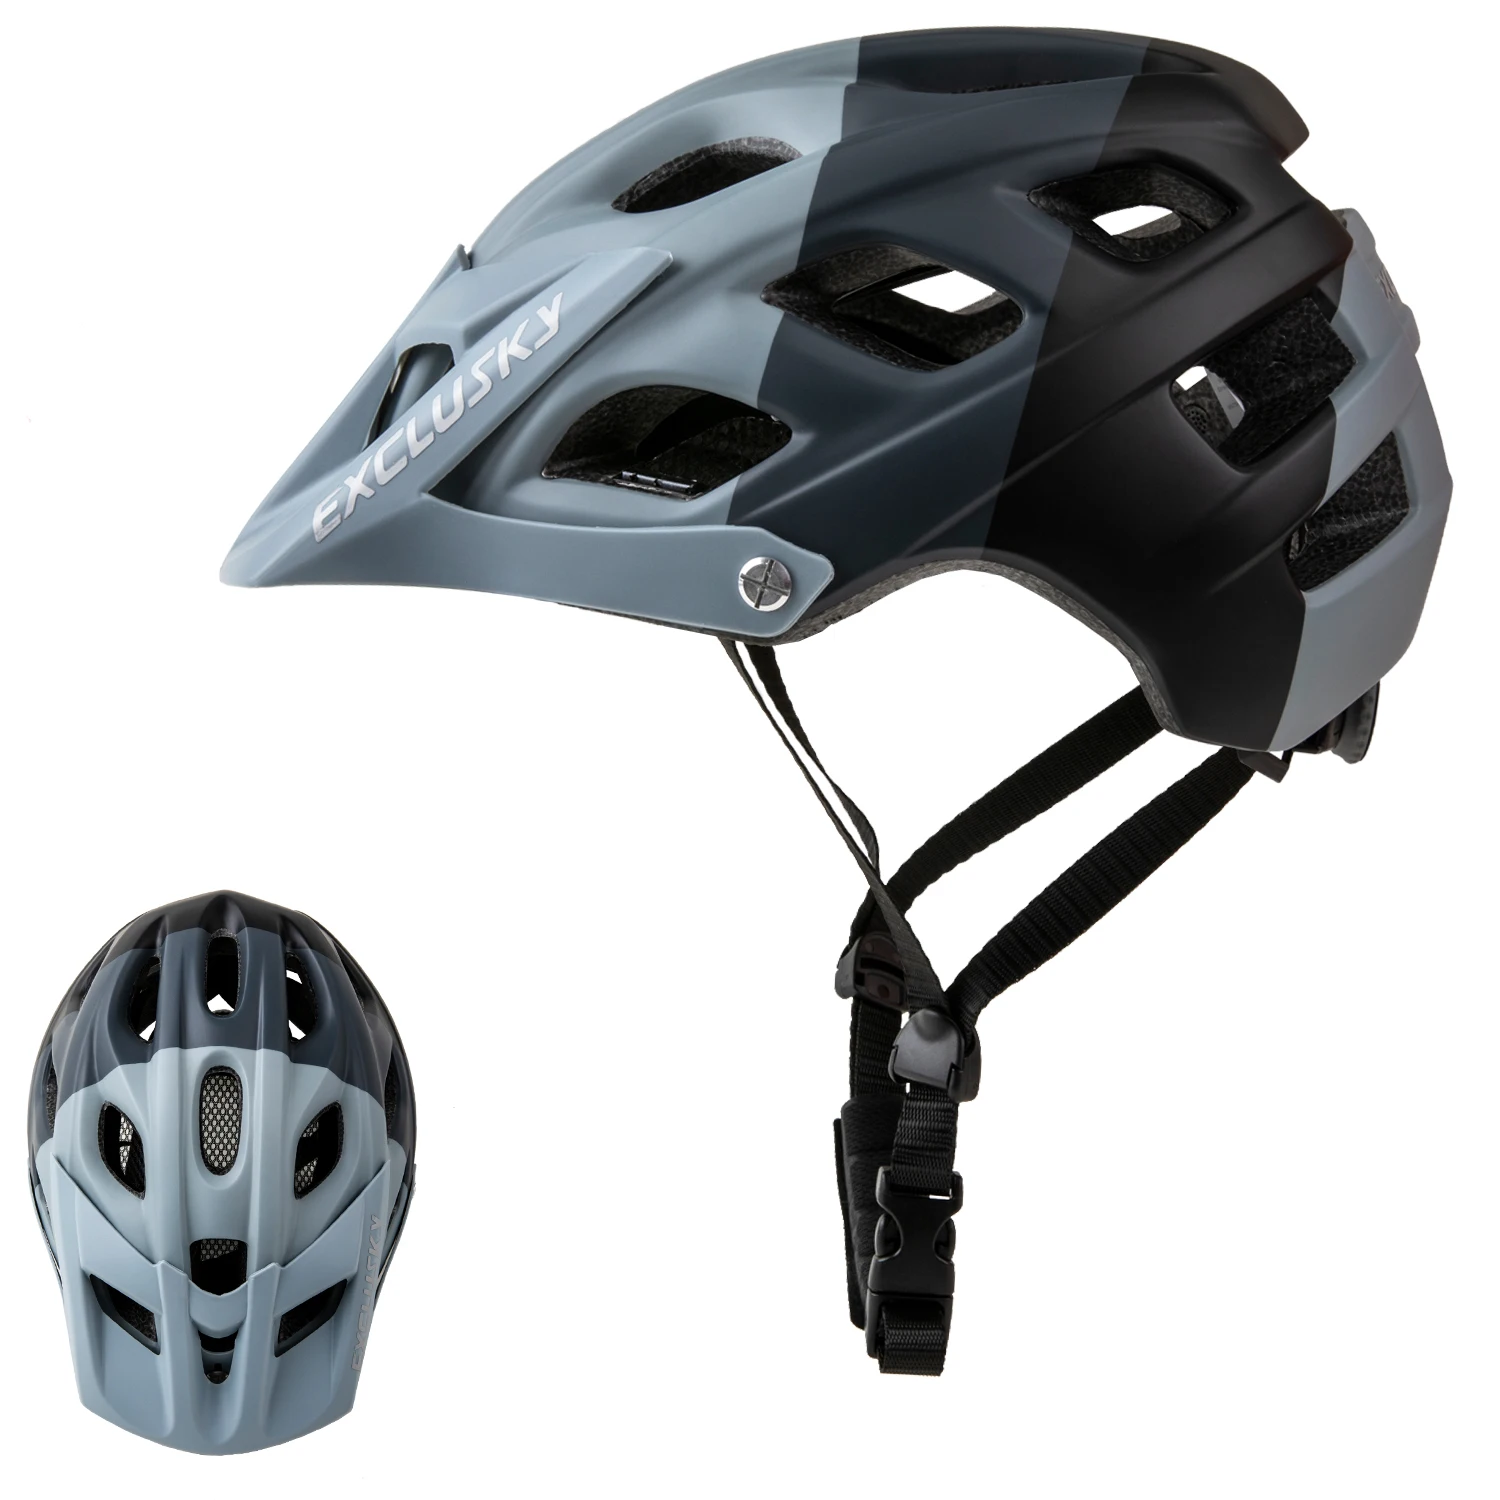 

Exclusky Adult MTB Bike Helmet With Visor Off Road Downhill Helmets Bicycle Safety Equipment CE EN 1078 CPSC Certification